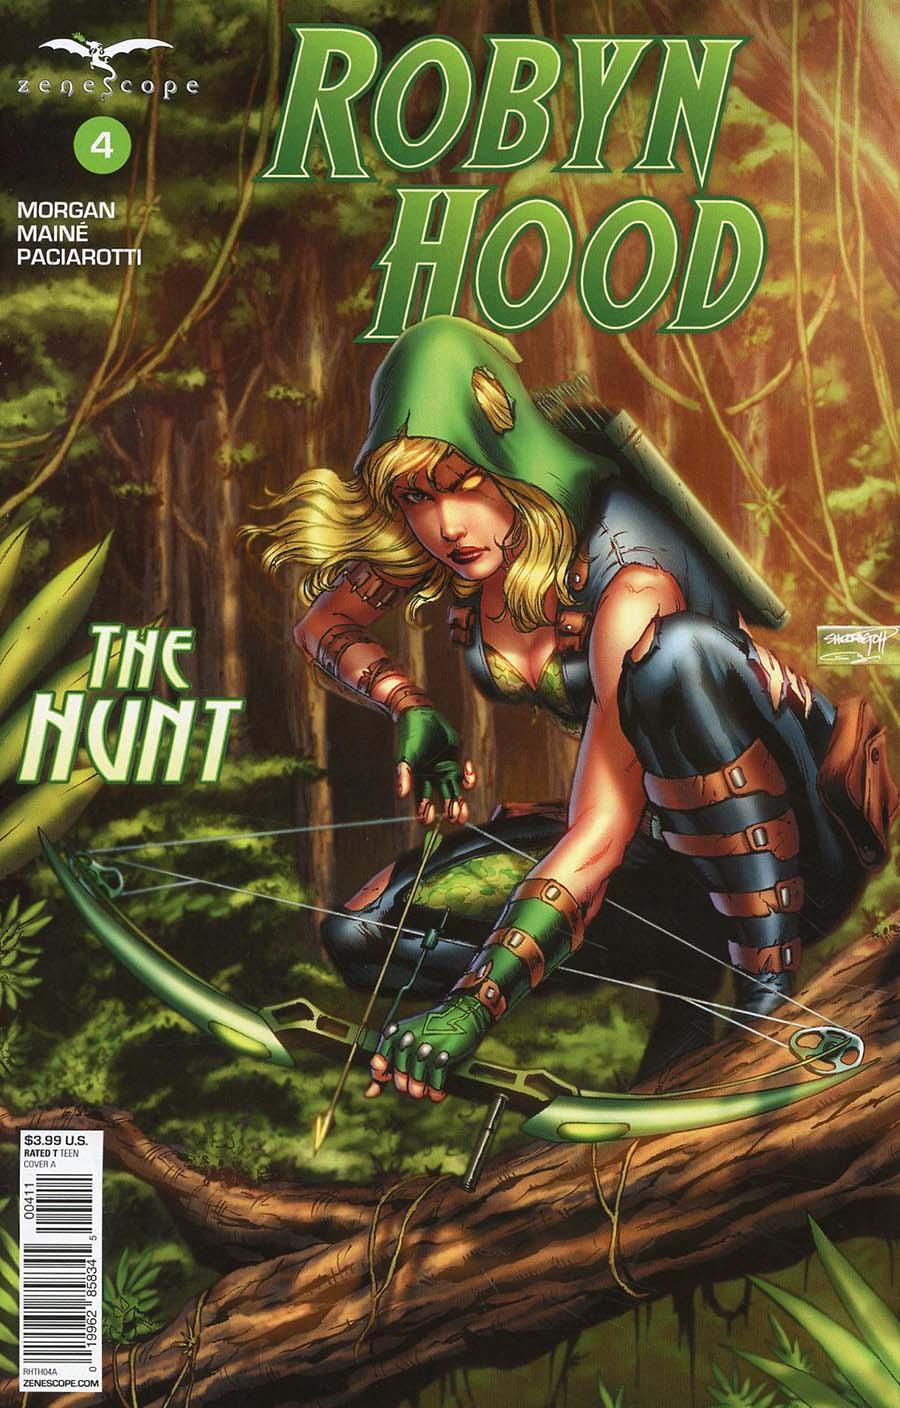 Grimm Fairy Tales Presents Robyn Hood The Hunt Vol. 1 #4